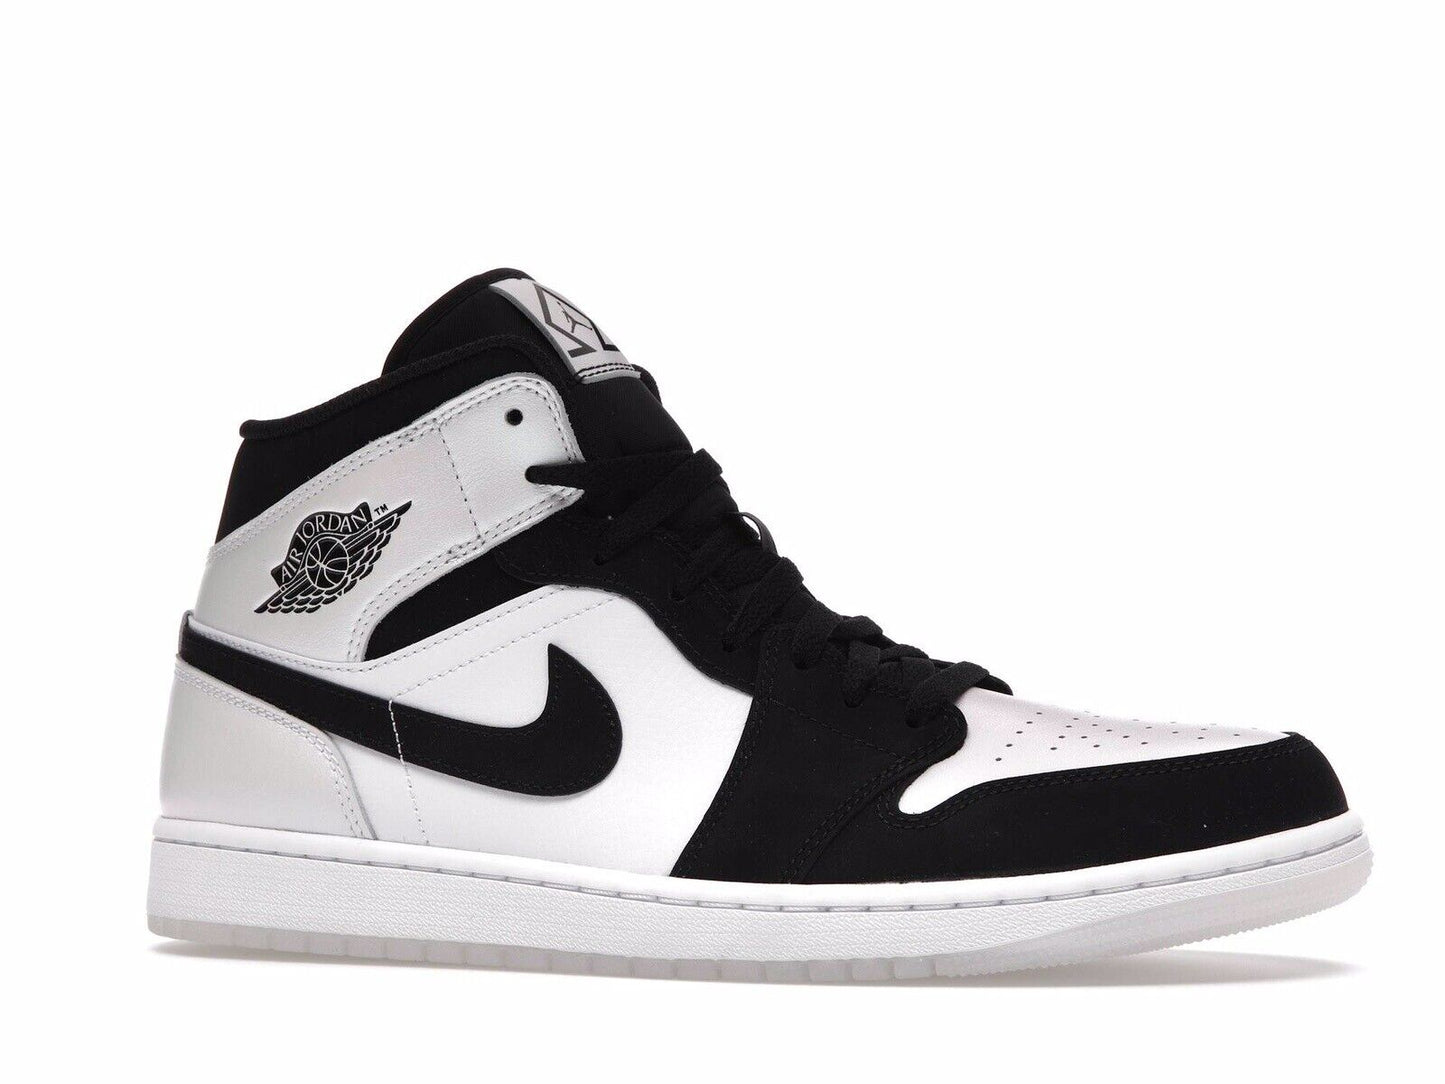 Air Jordan 1 Mid SE 'Diamond' DH6933-100 Men's White/Black Sneaker Shoes B009